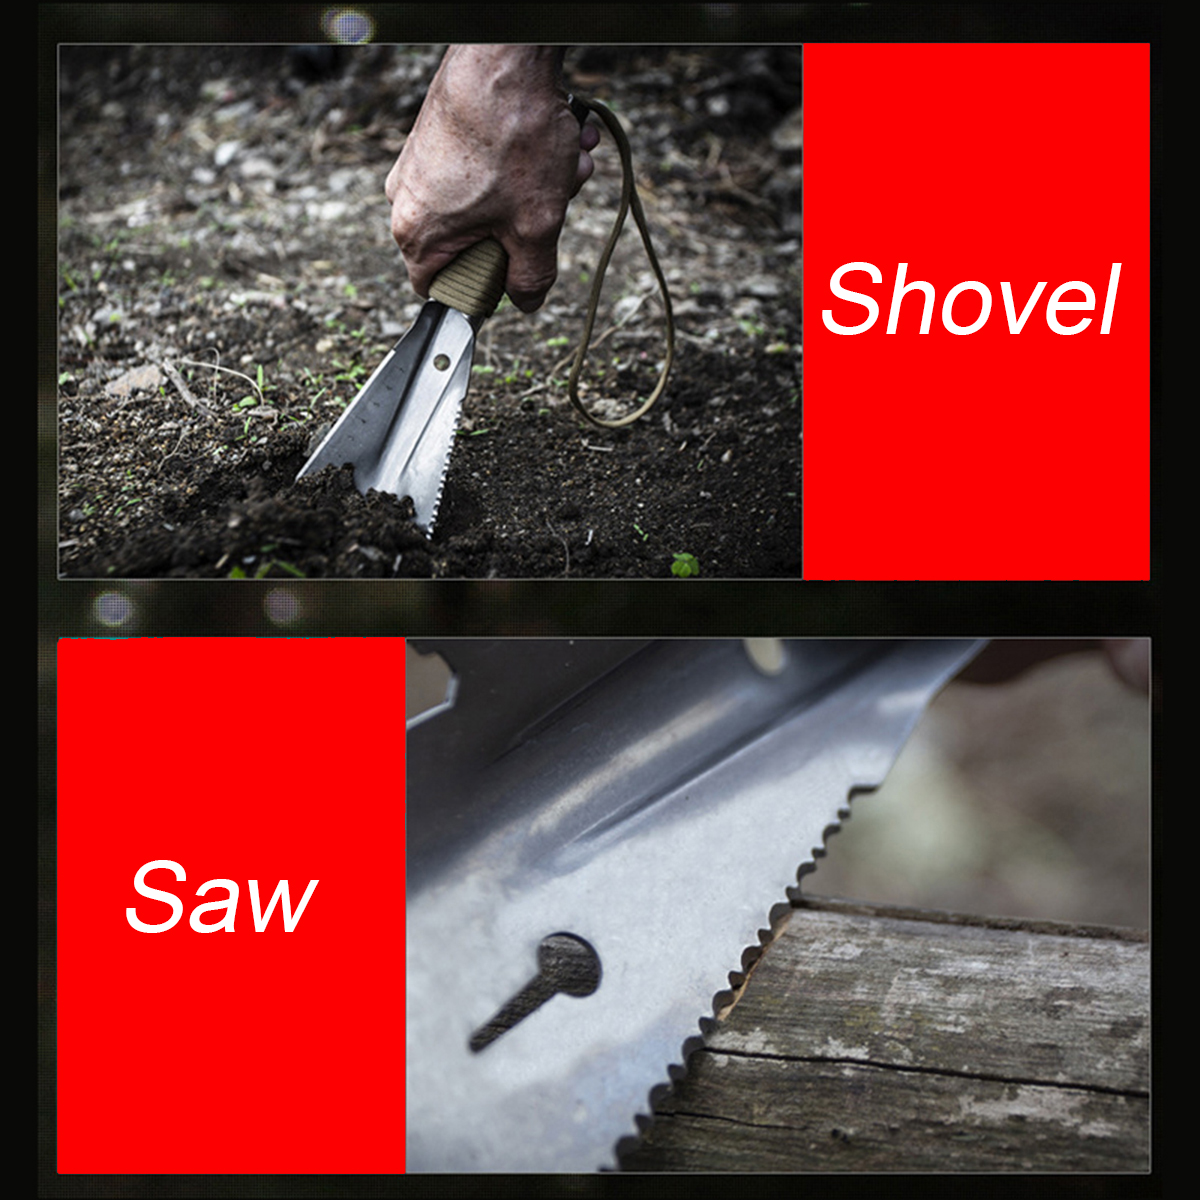 Multifunction-Stainless-Steel-Shovel-Trowel-Garden-Camping-Hiking-Shovel-Outdoor-Army-Shovel-1639383-4